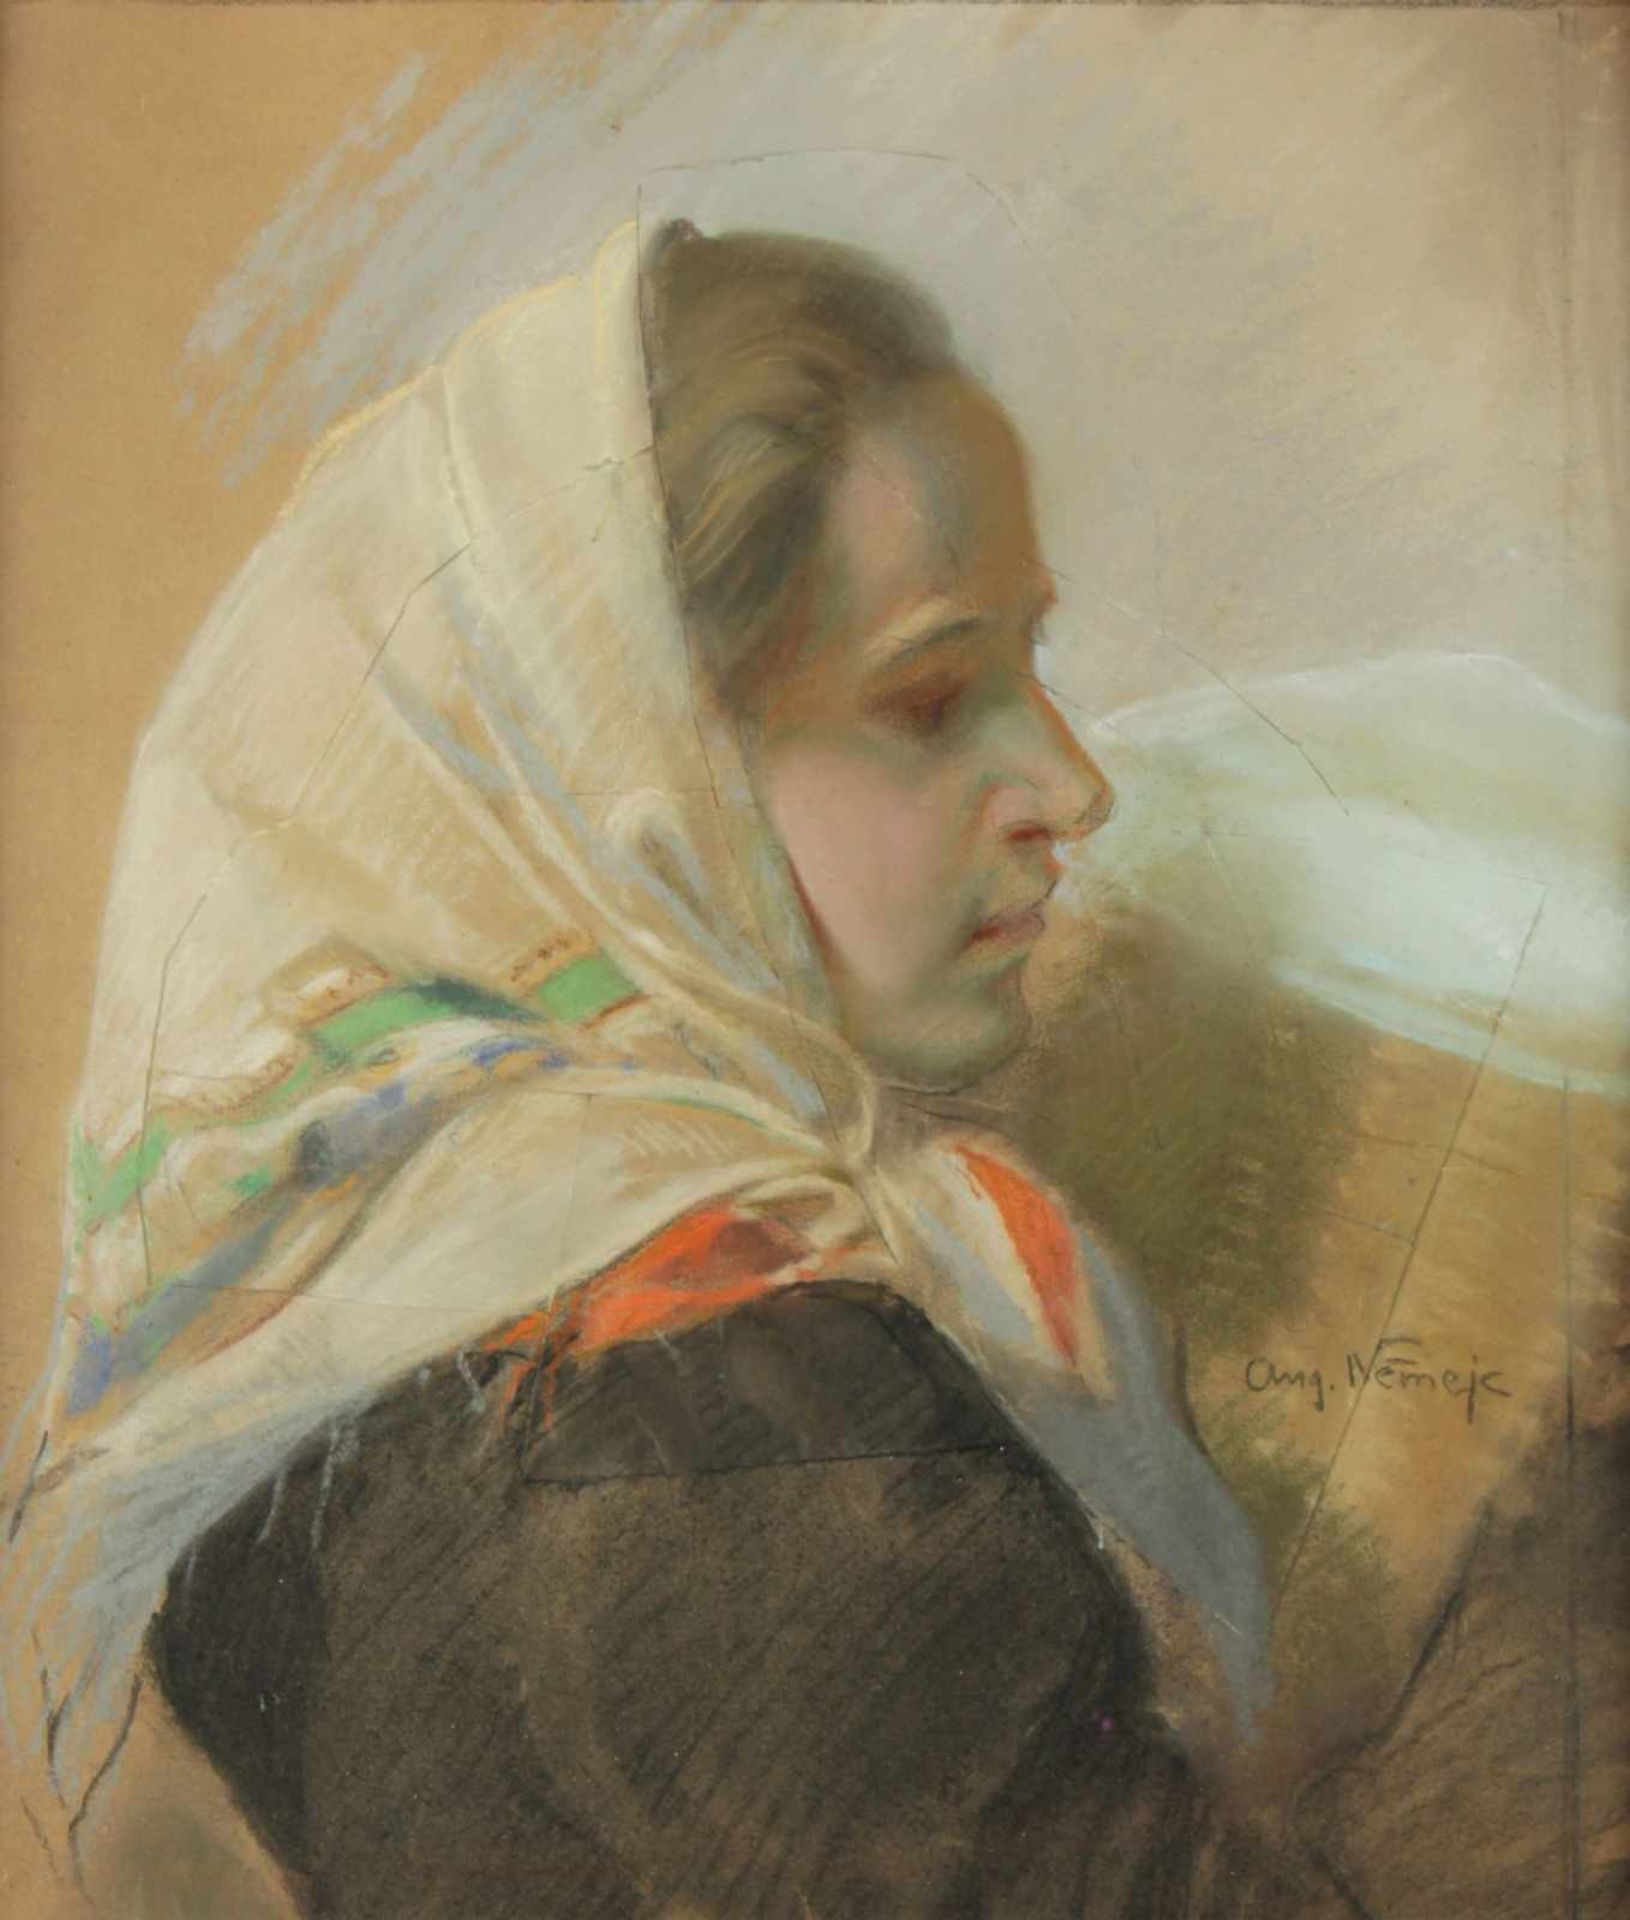 Němejc Augustin (Czech, 1861 - 1938) Girls portrait, pastel on paper, 51 x 45 cm, signed lower right